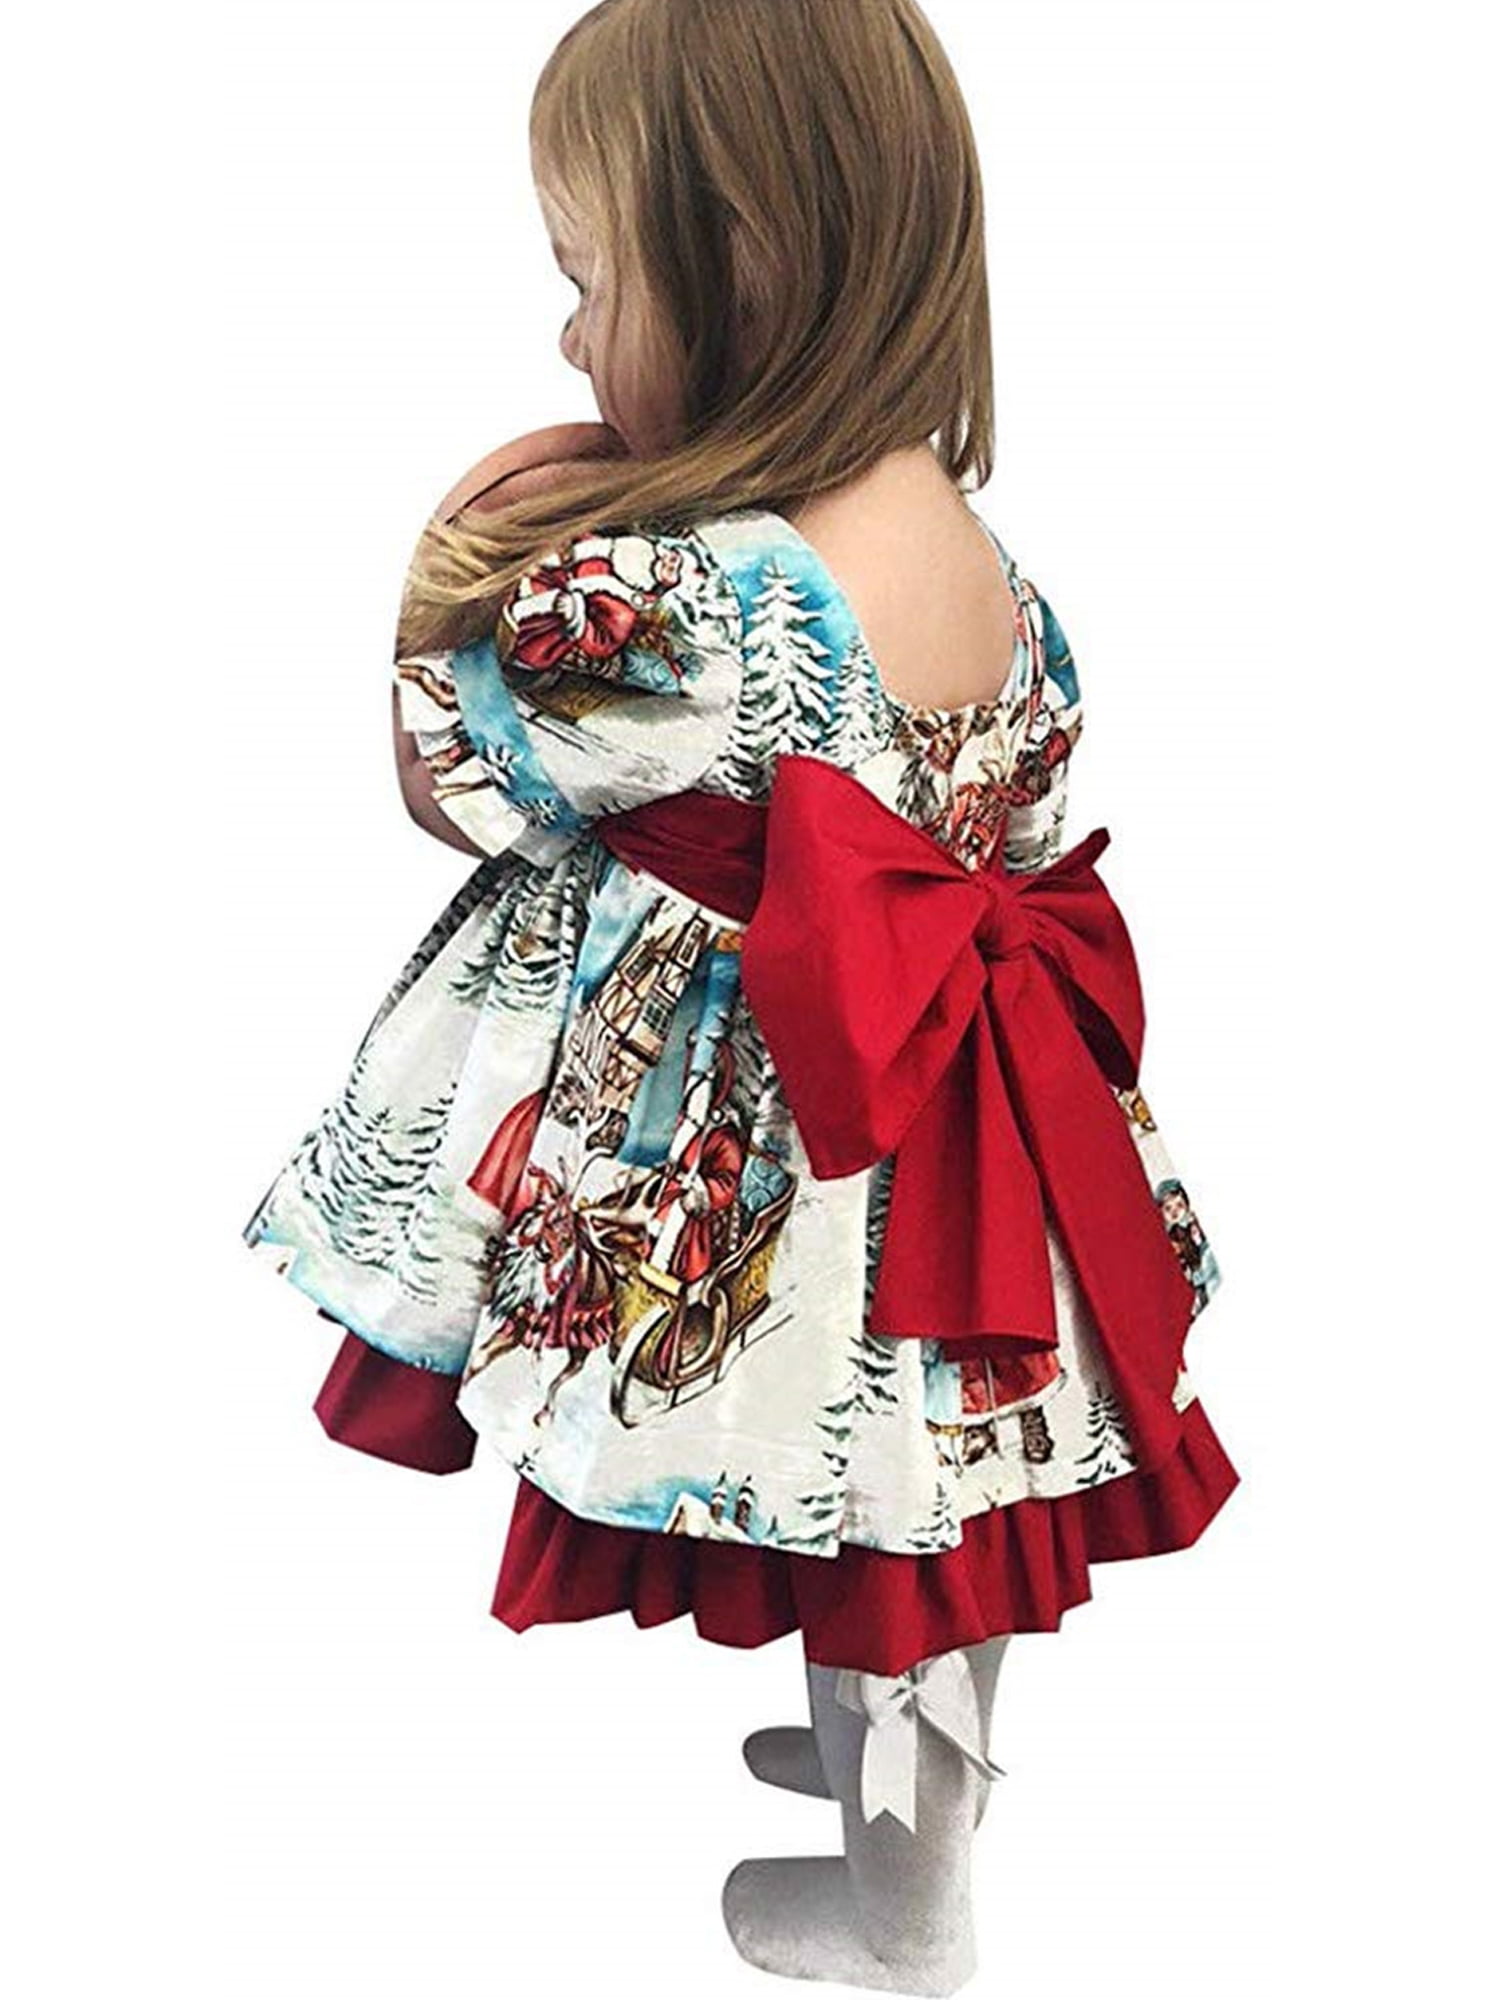 Christmas Newbron Baby Girls Santa Tutu Dress Xmas Party Princess Dresses Outfit